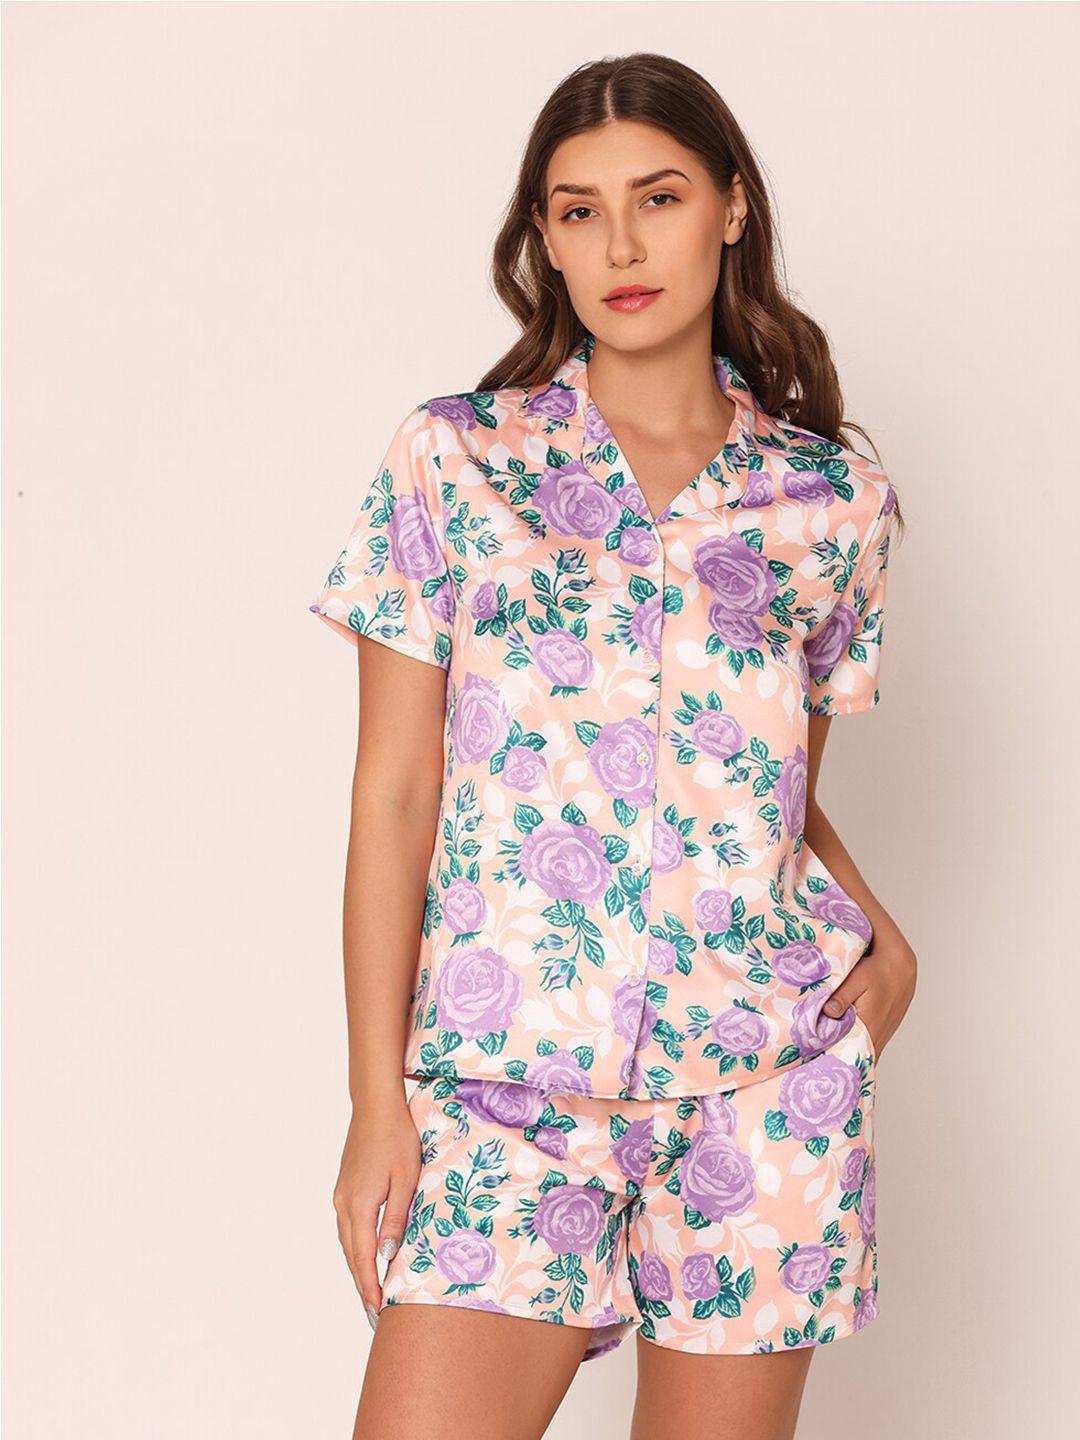 vami floral printed shirt & shorts satin night suit